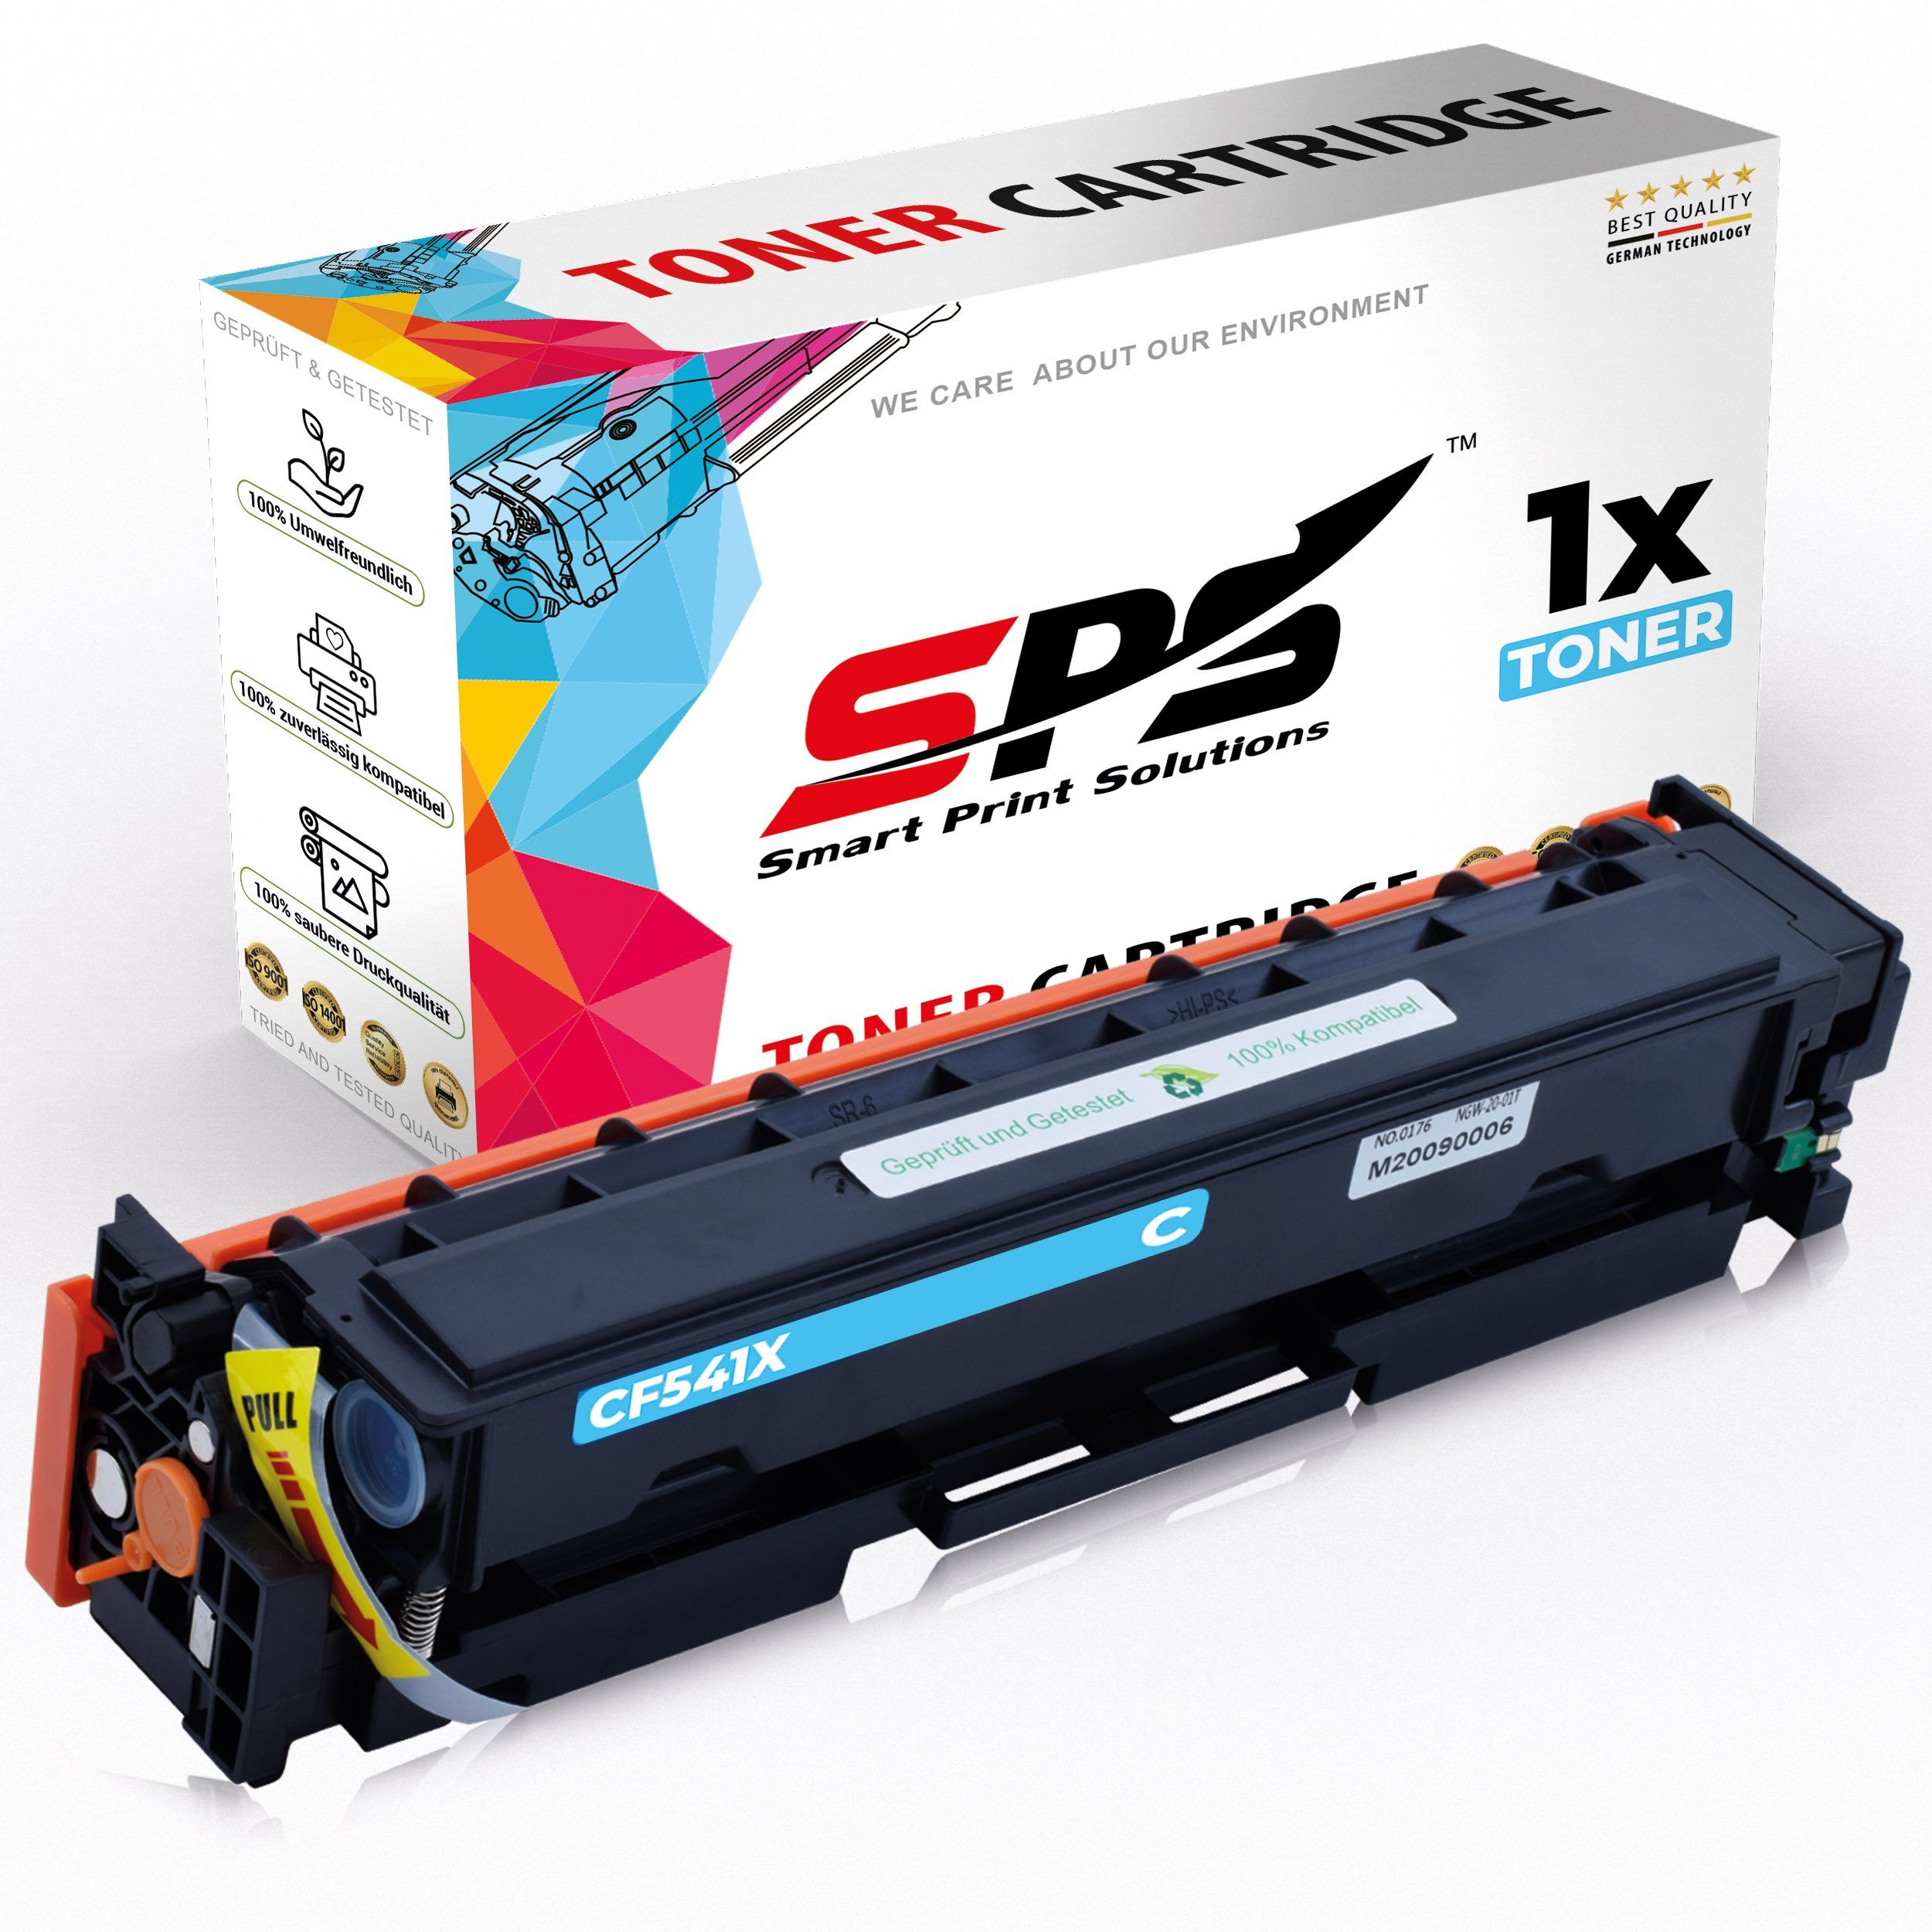 M 254 (CF541X, SPS (1er Kompatibel Toner) Pro Tonerkartusche für Color Pack, 1x Laserjet HP